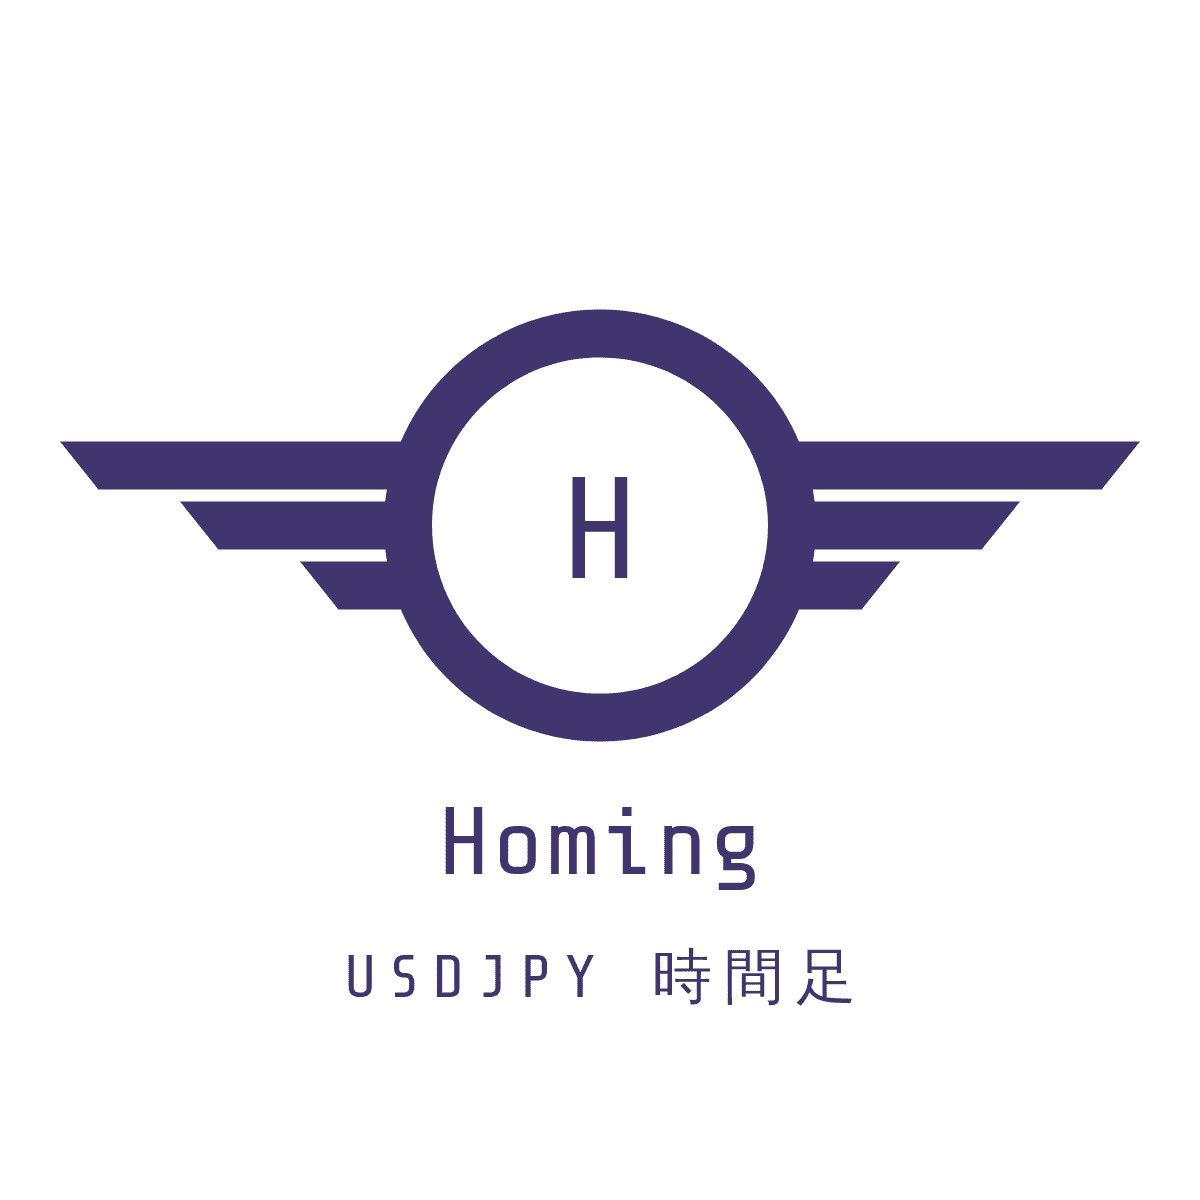 Homing USDJPY 時間足 Tự động giao dịch